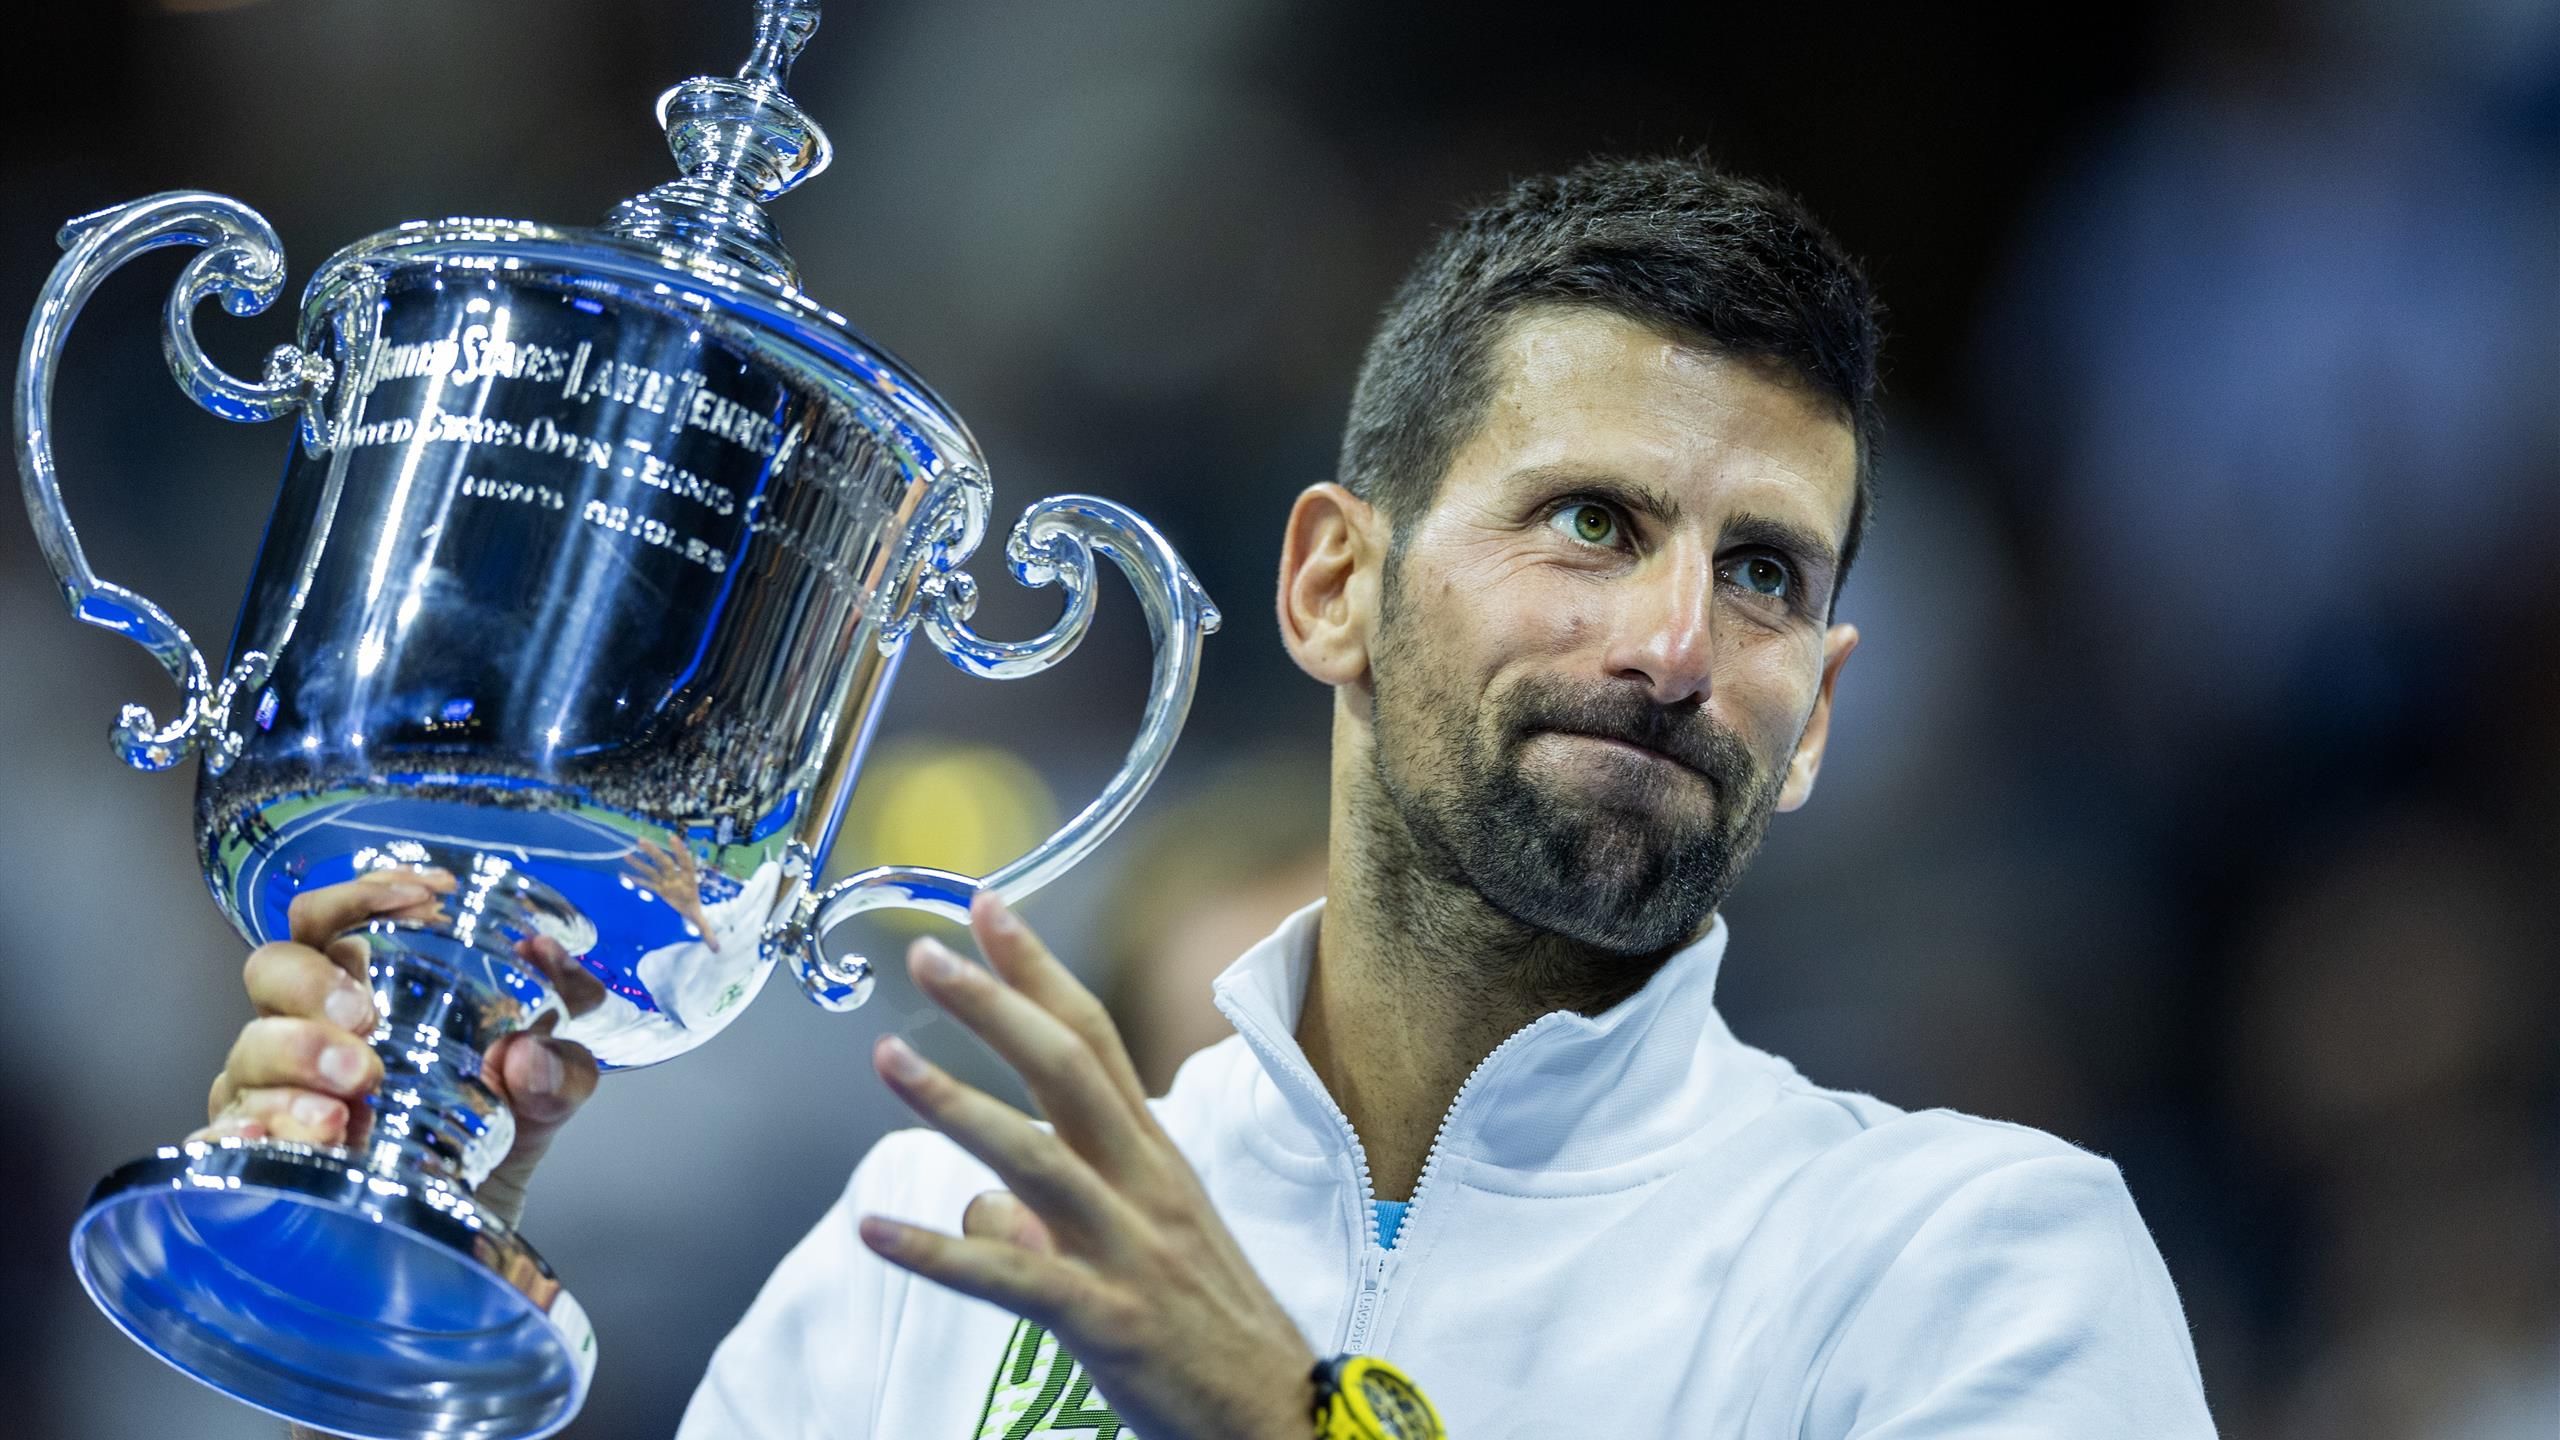 Novak Djokovic will he hit 400-week milestone as No